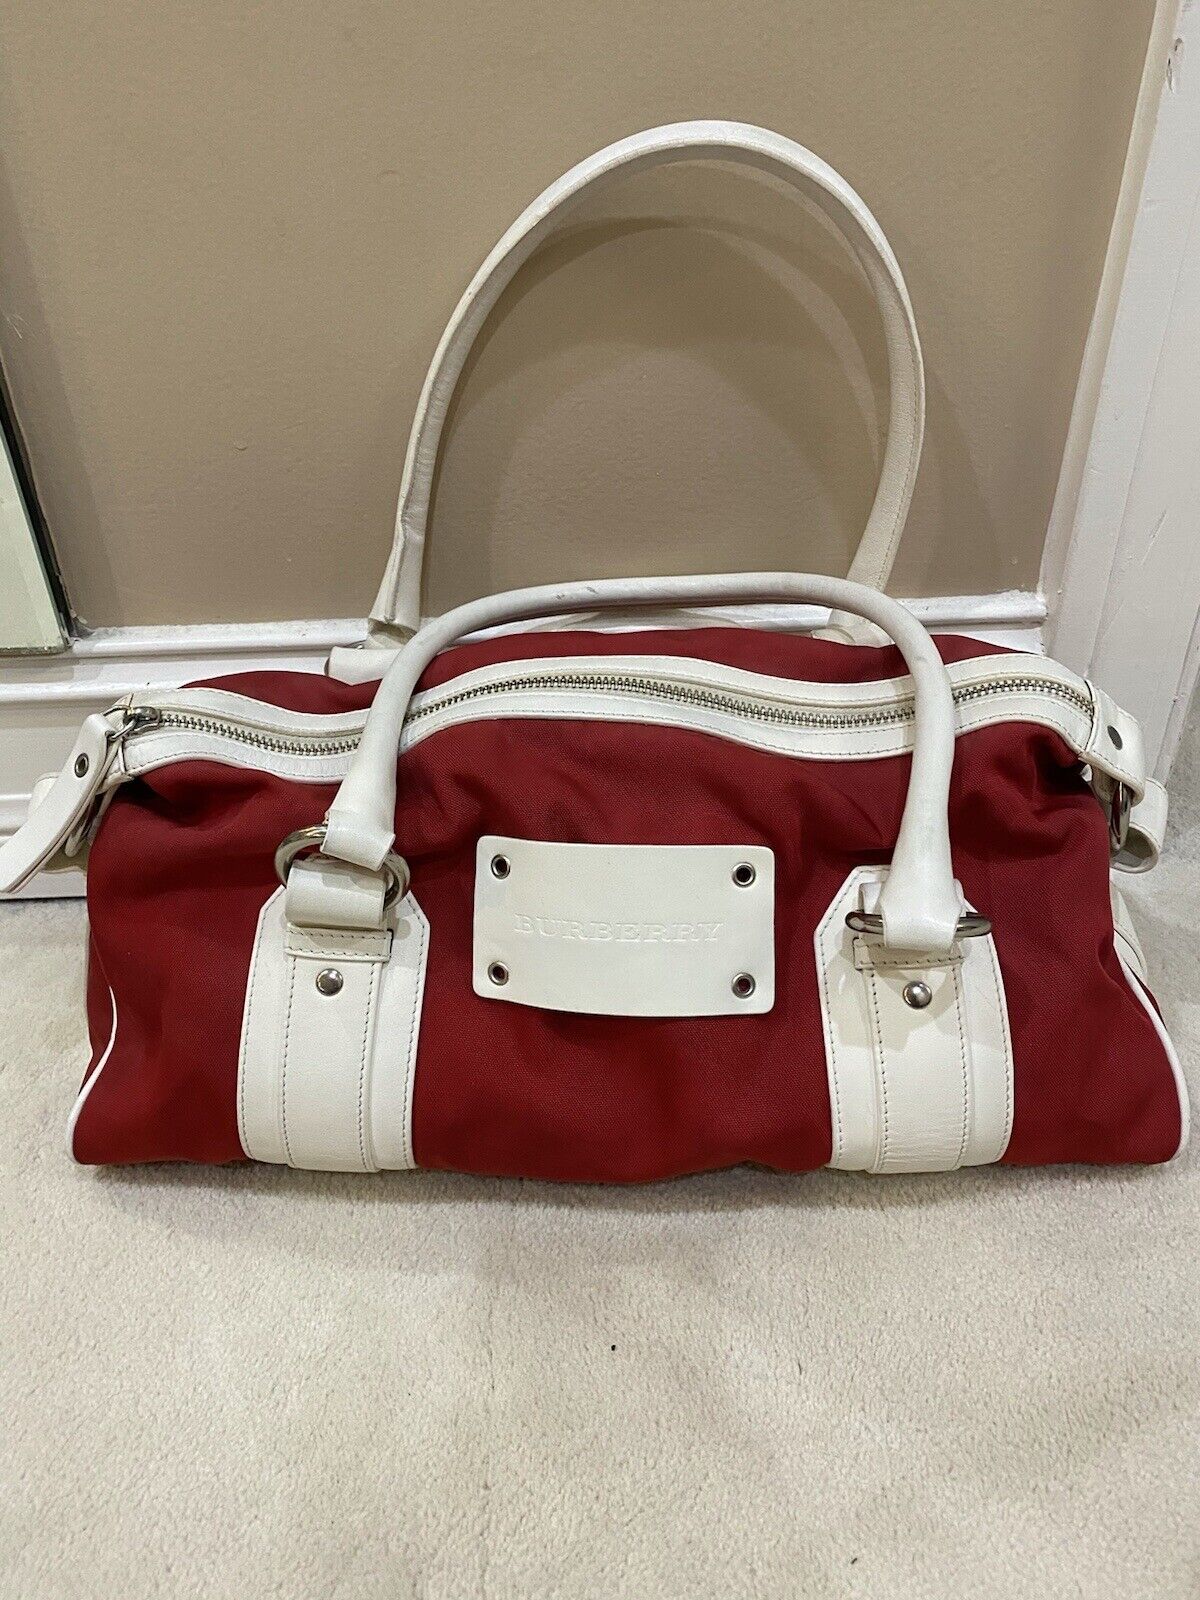 burberry handbags authentic used - image 1